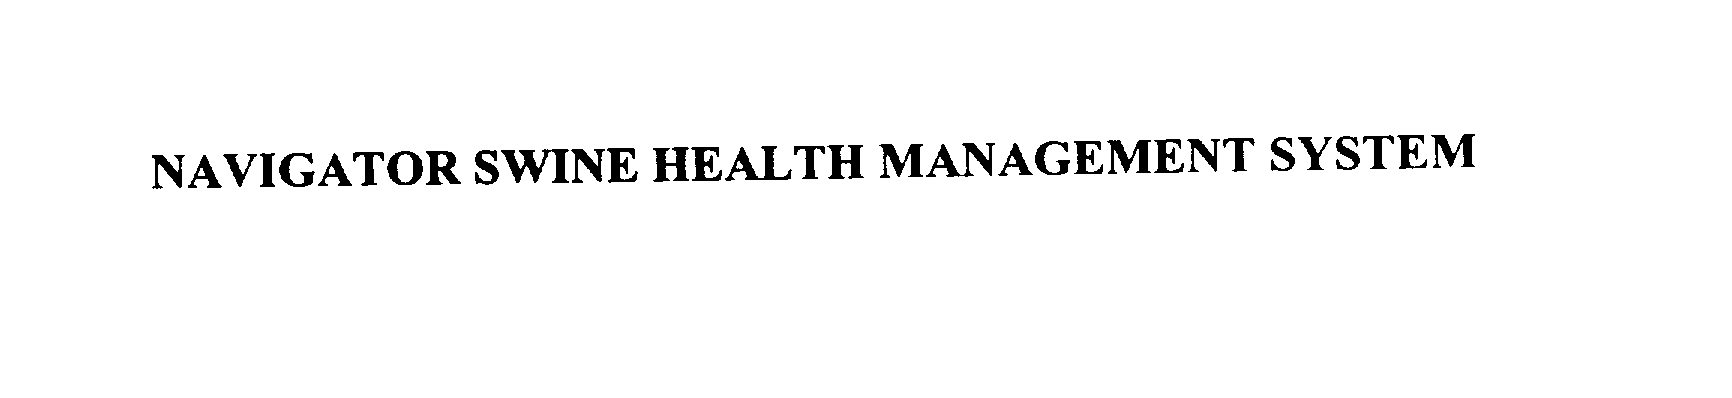  NAVIGATOR SWINE HEALTH MANAGEMENT SYSTEM